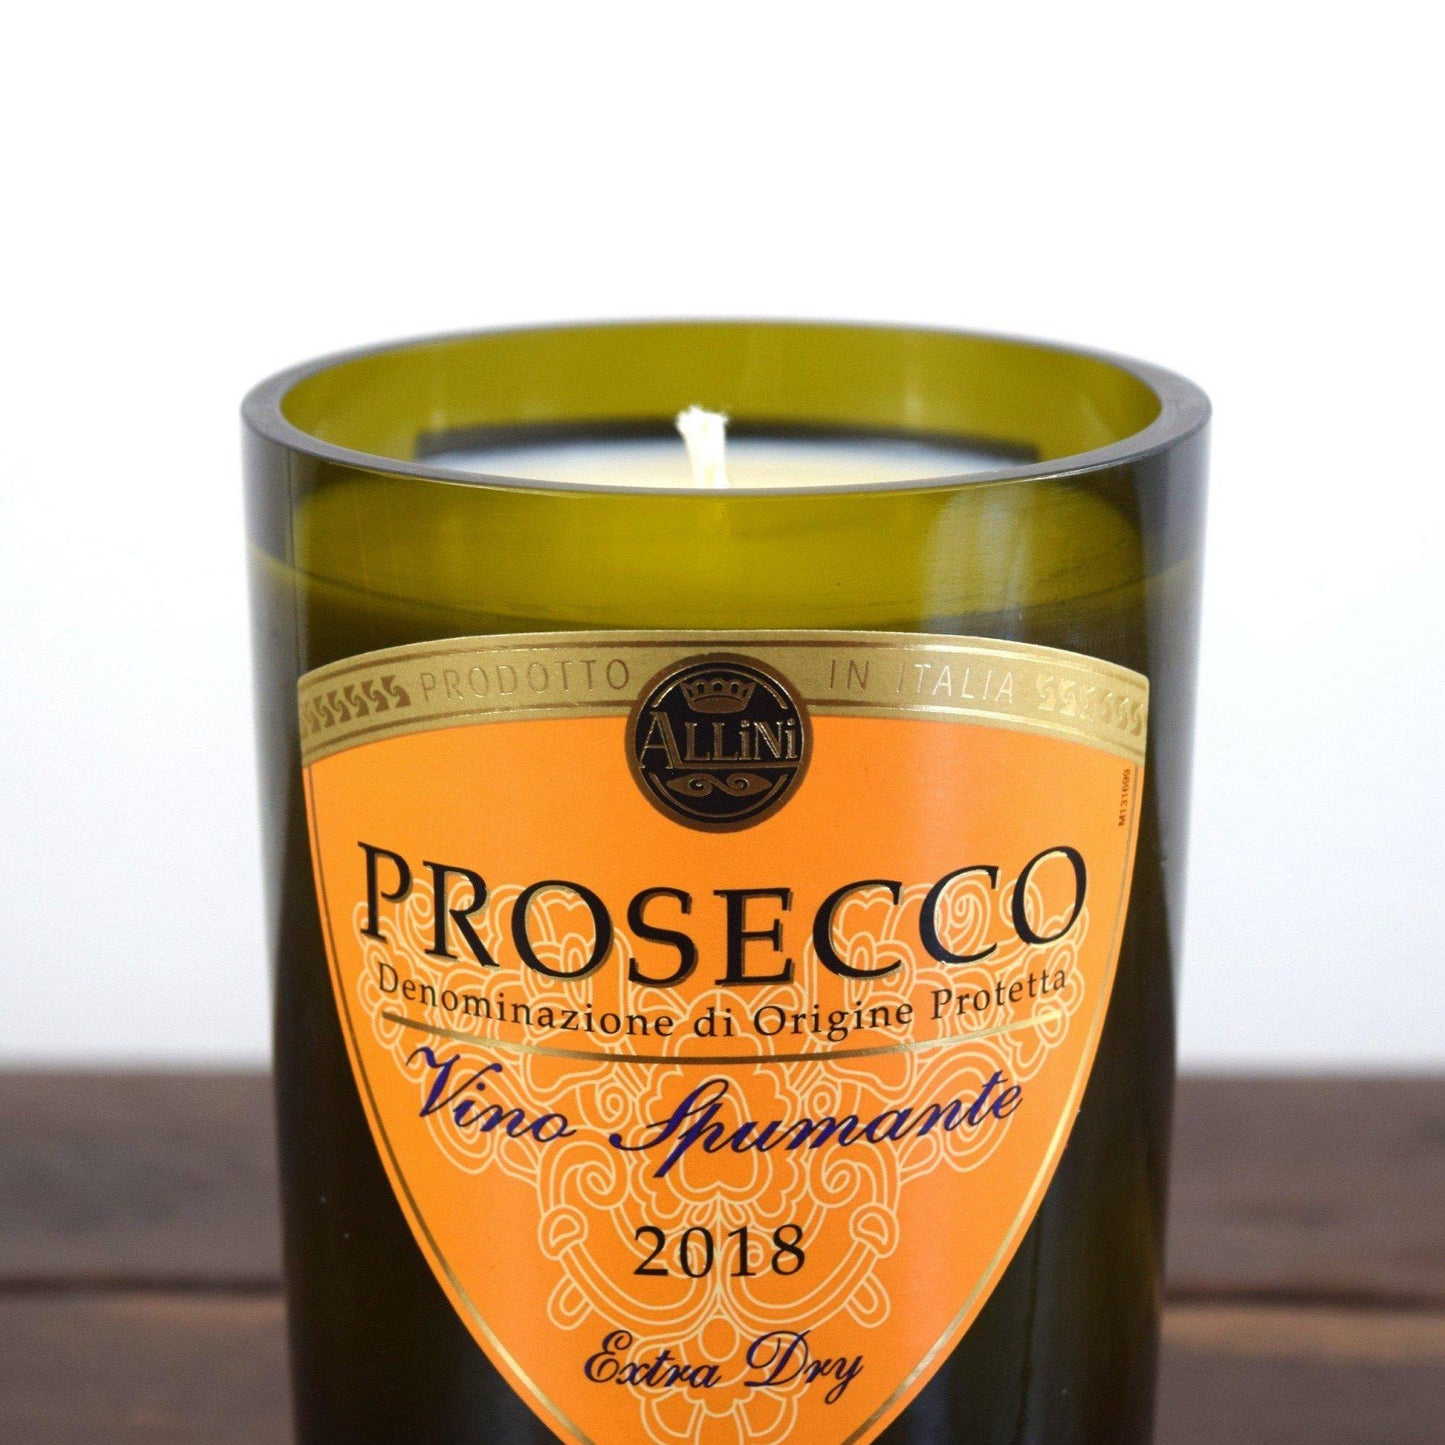 Prosecco Vino Spumante Bottle Candle Wine & Prosecco Bottle Candles Adhock Homeware